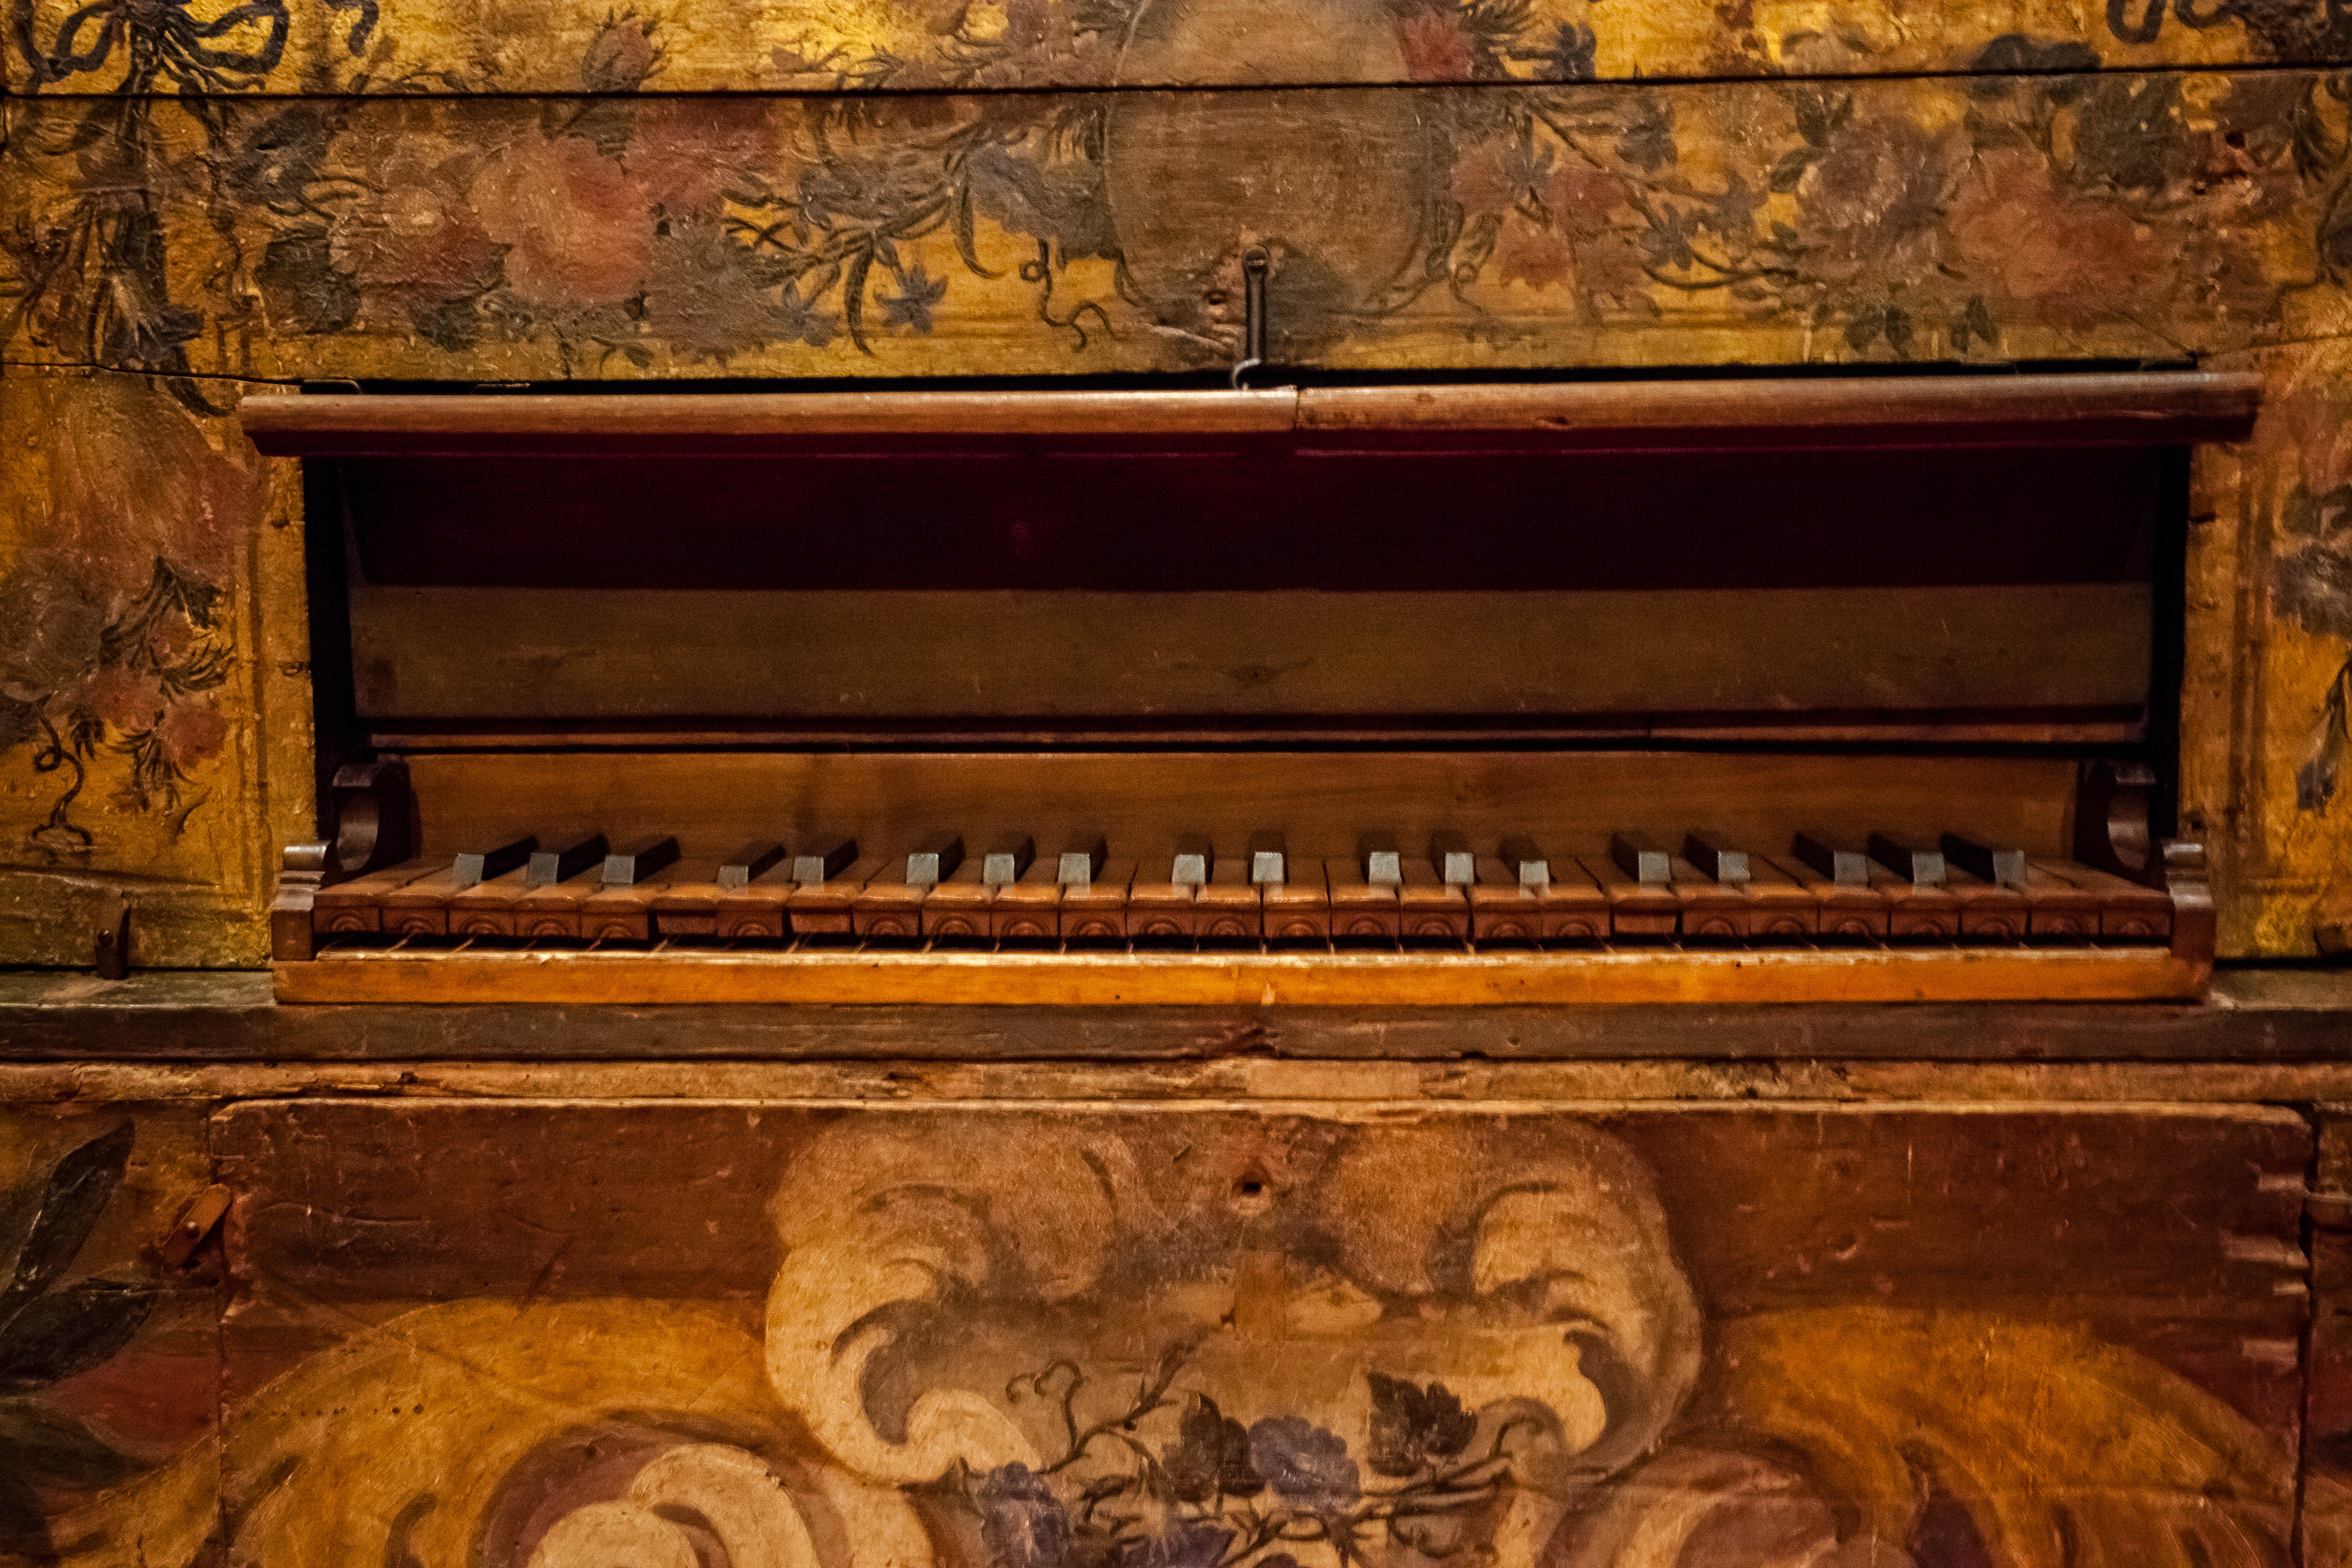 <i>Detalle de un órgano del Museo de la Música de Barcelona</i>, órgano: Josep Boscà (sXVIII), fotografía: Sara Guasteví, 2013, licencia Creative Commons